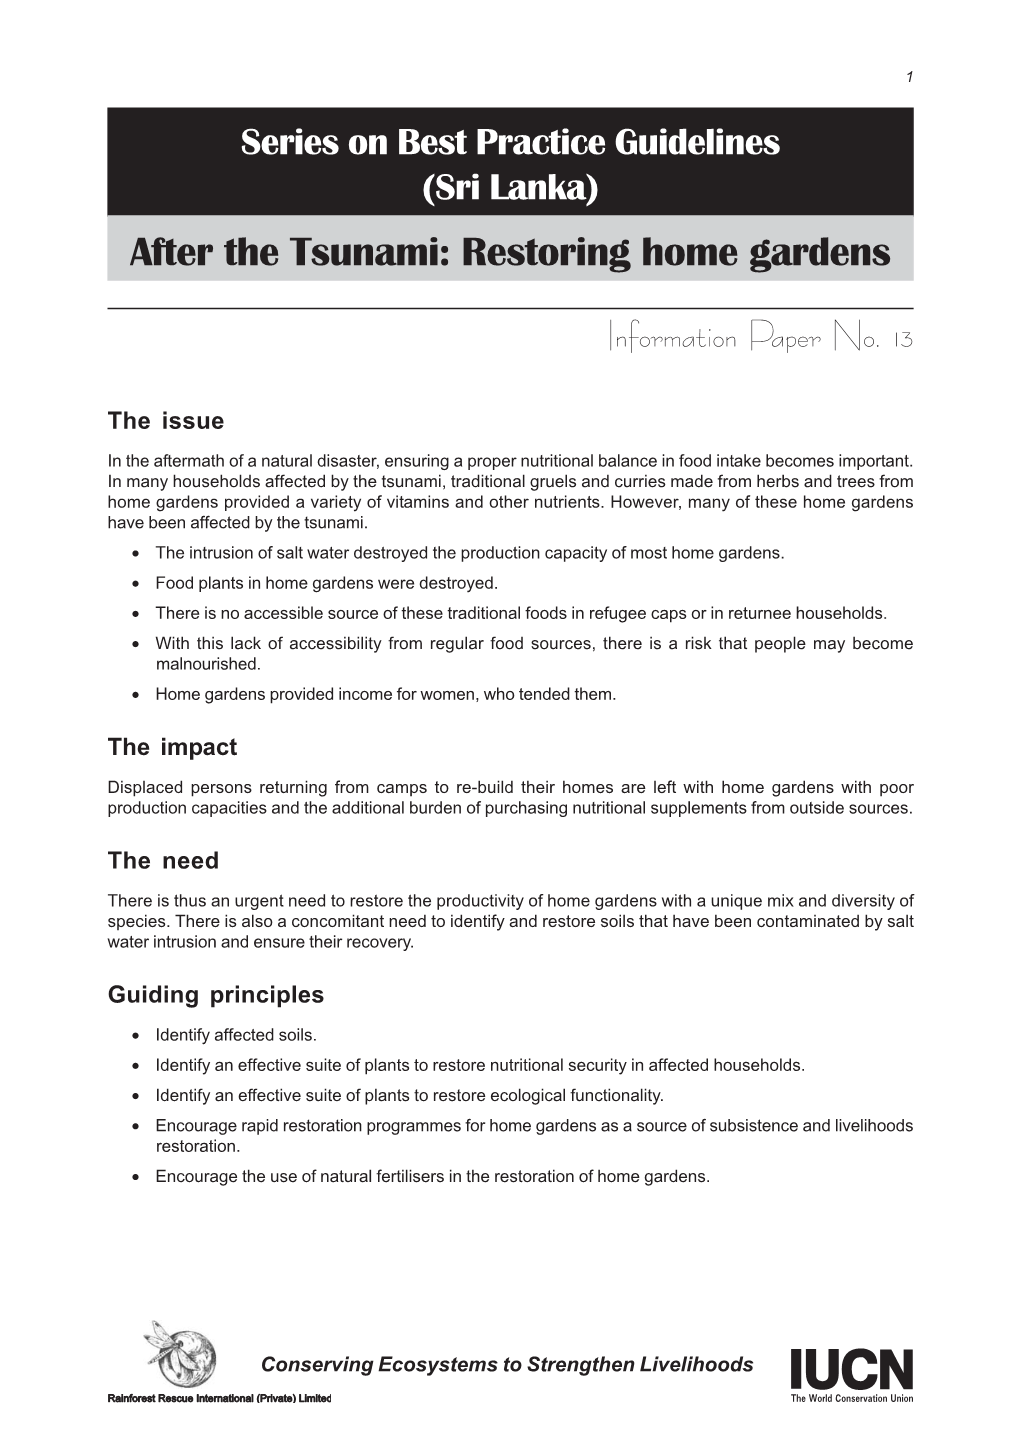 After the Tsunami: Restoring Home Gardens